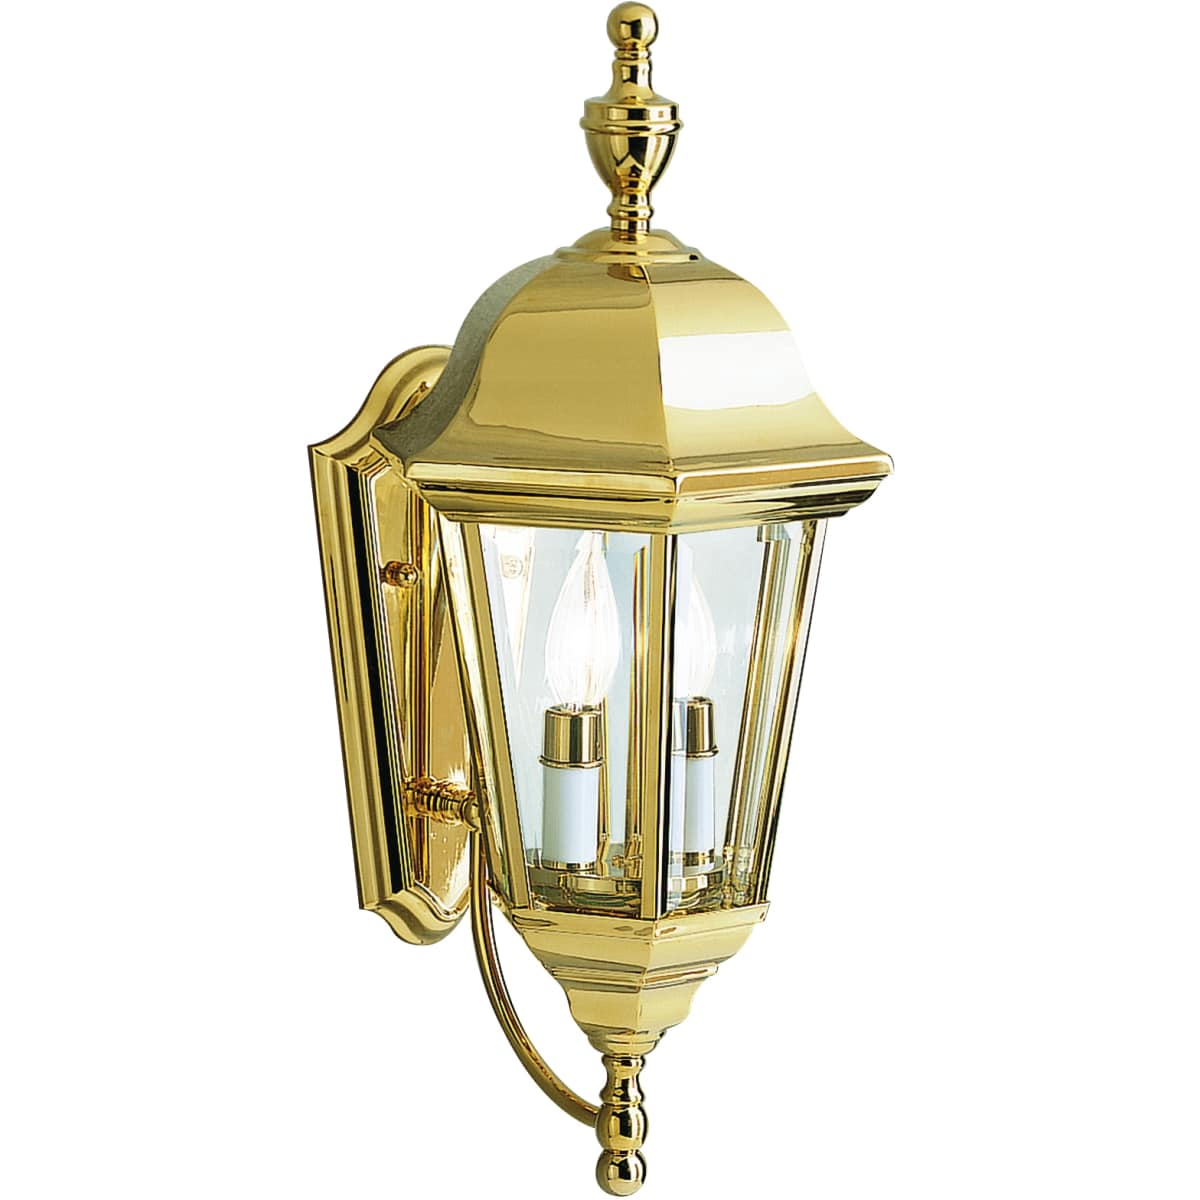 Kichler 9439pb Polished Brass Lifetime, Brass Outdoor Wall Mount Light Fixtures